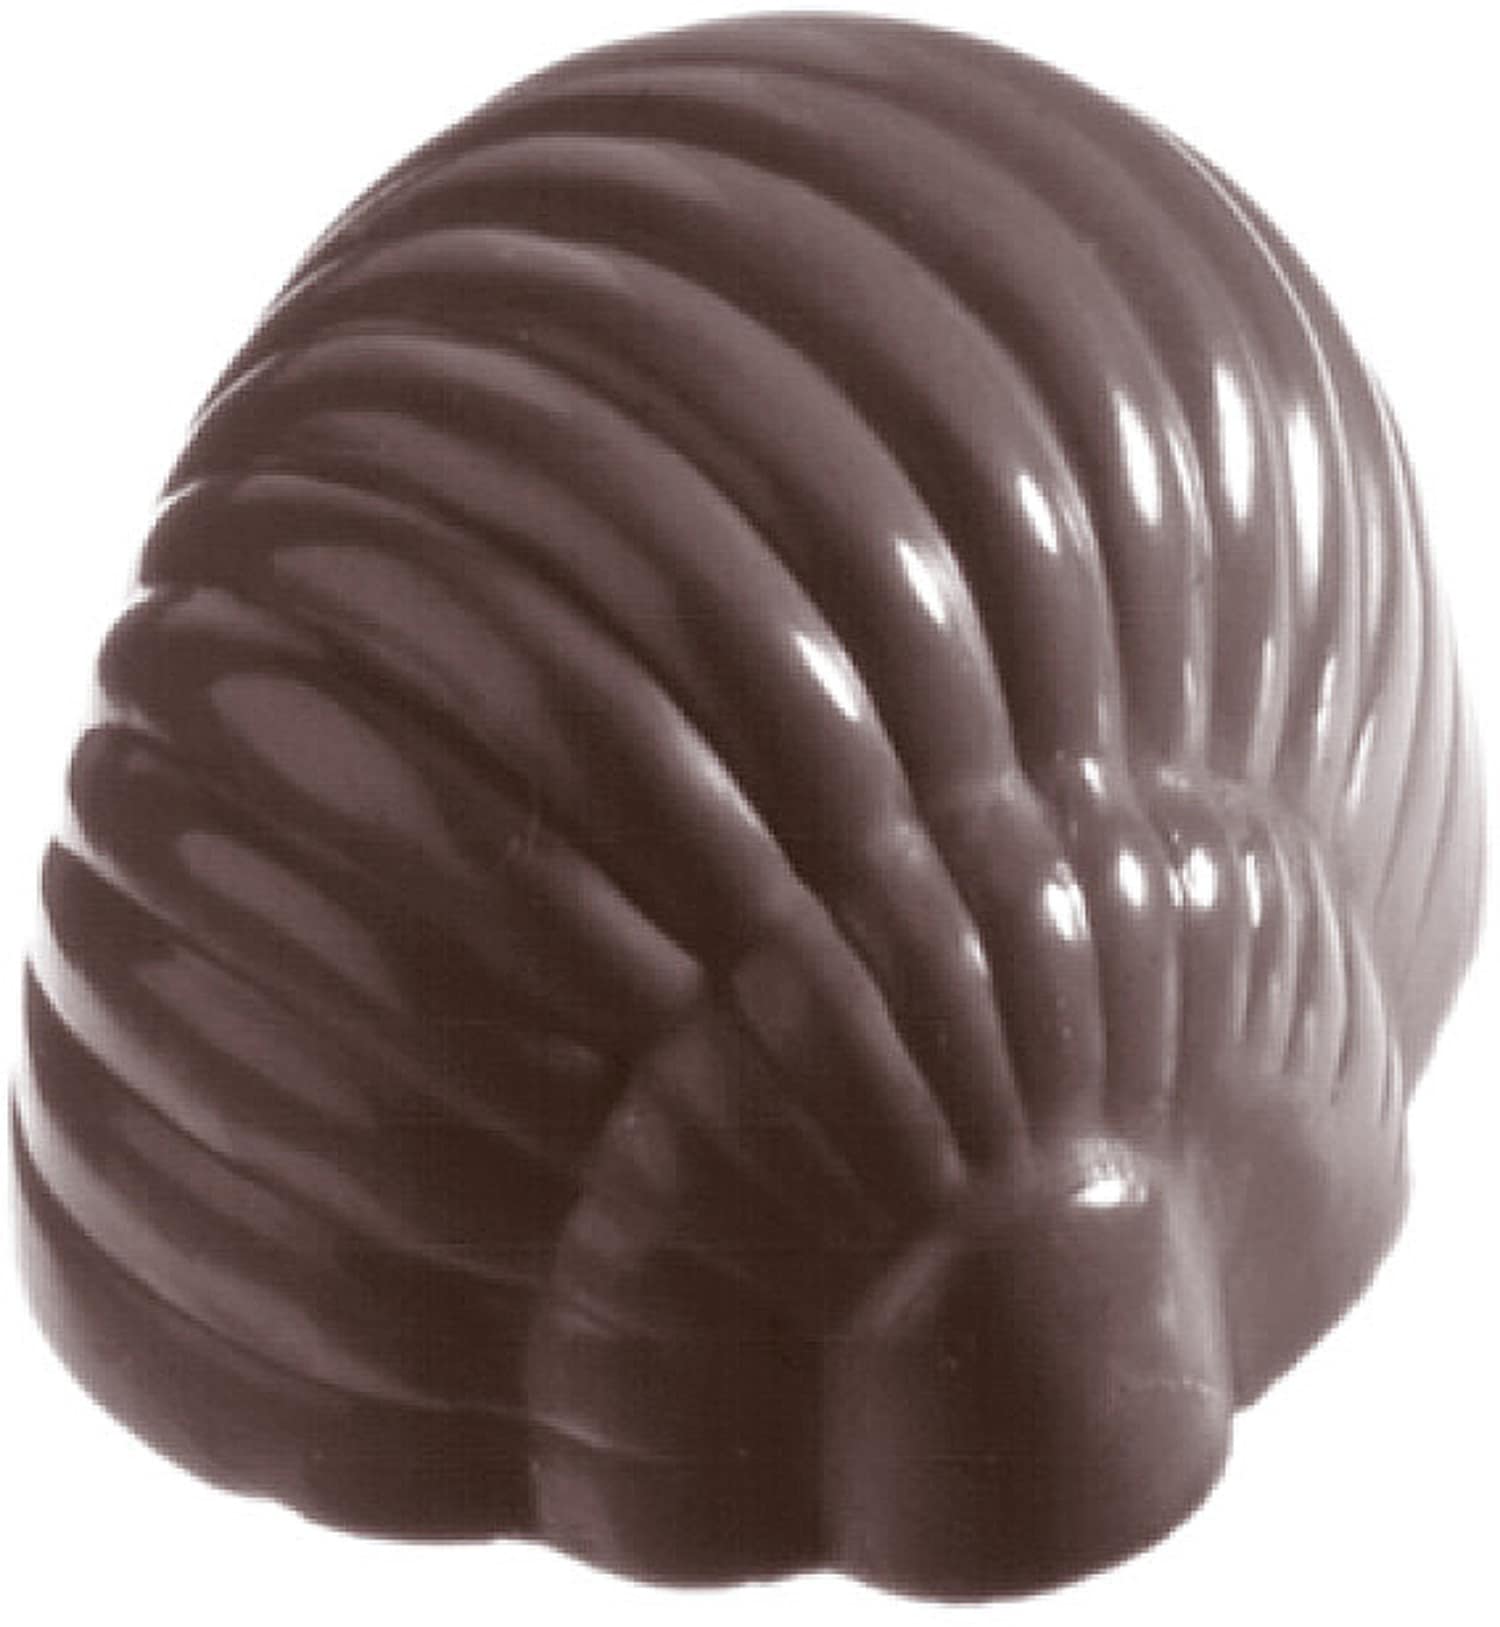 Schokoladenform "Meeresfrüchte" 421084 421084